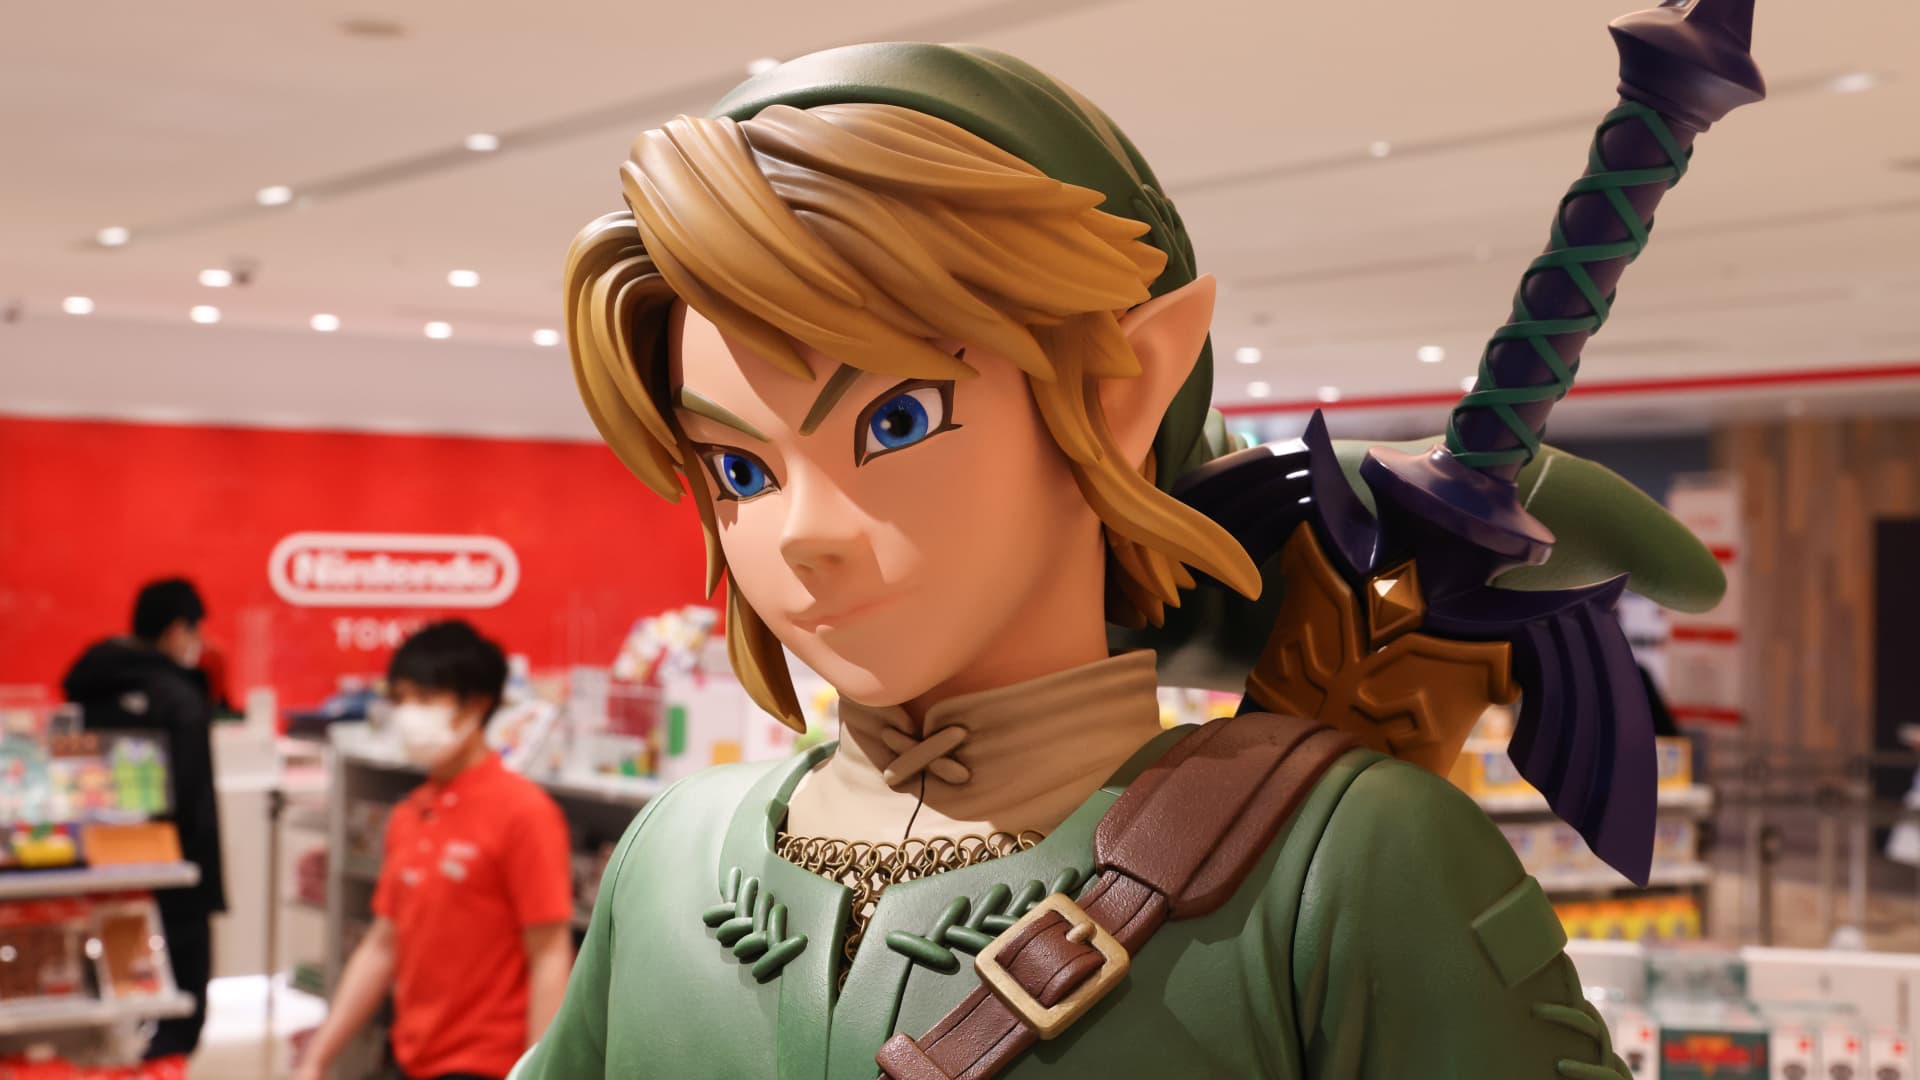 Nintendo to make The Legend of Zelda movie after Mario success